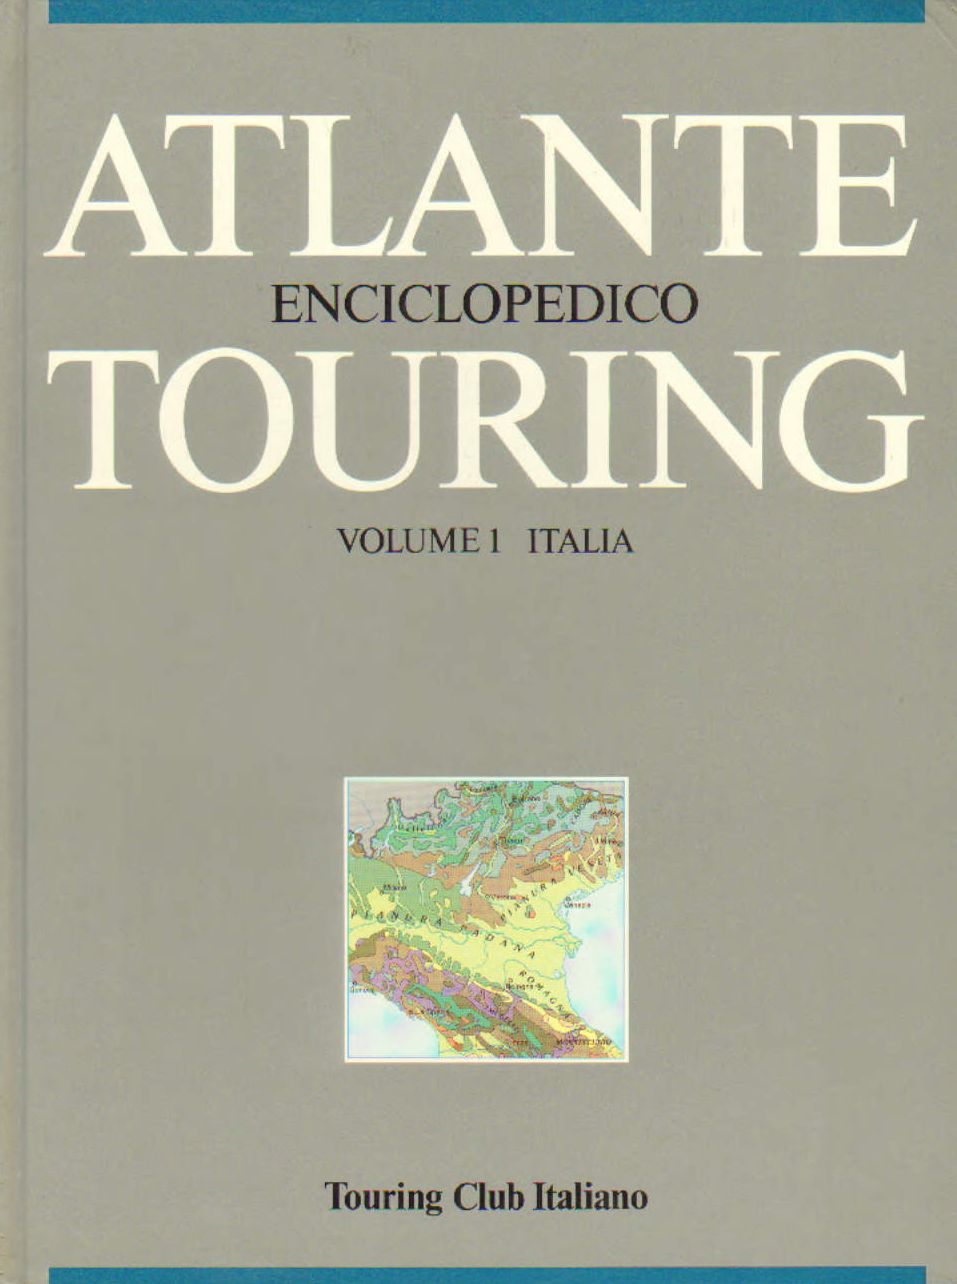 Atlante Enciclopedico Touring volume 1 Italia